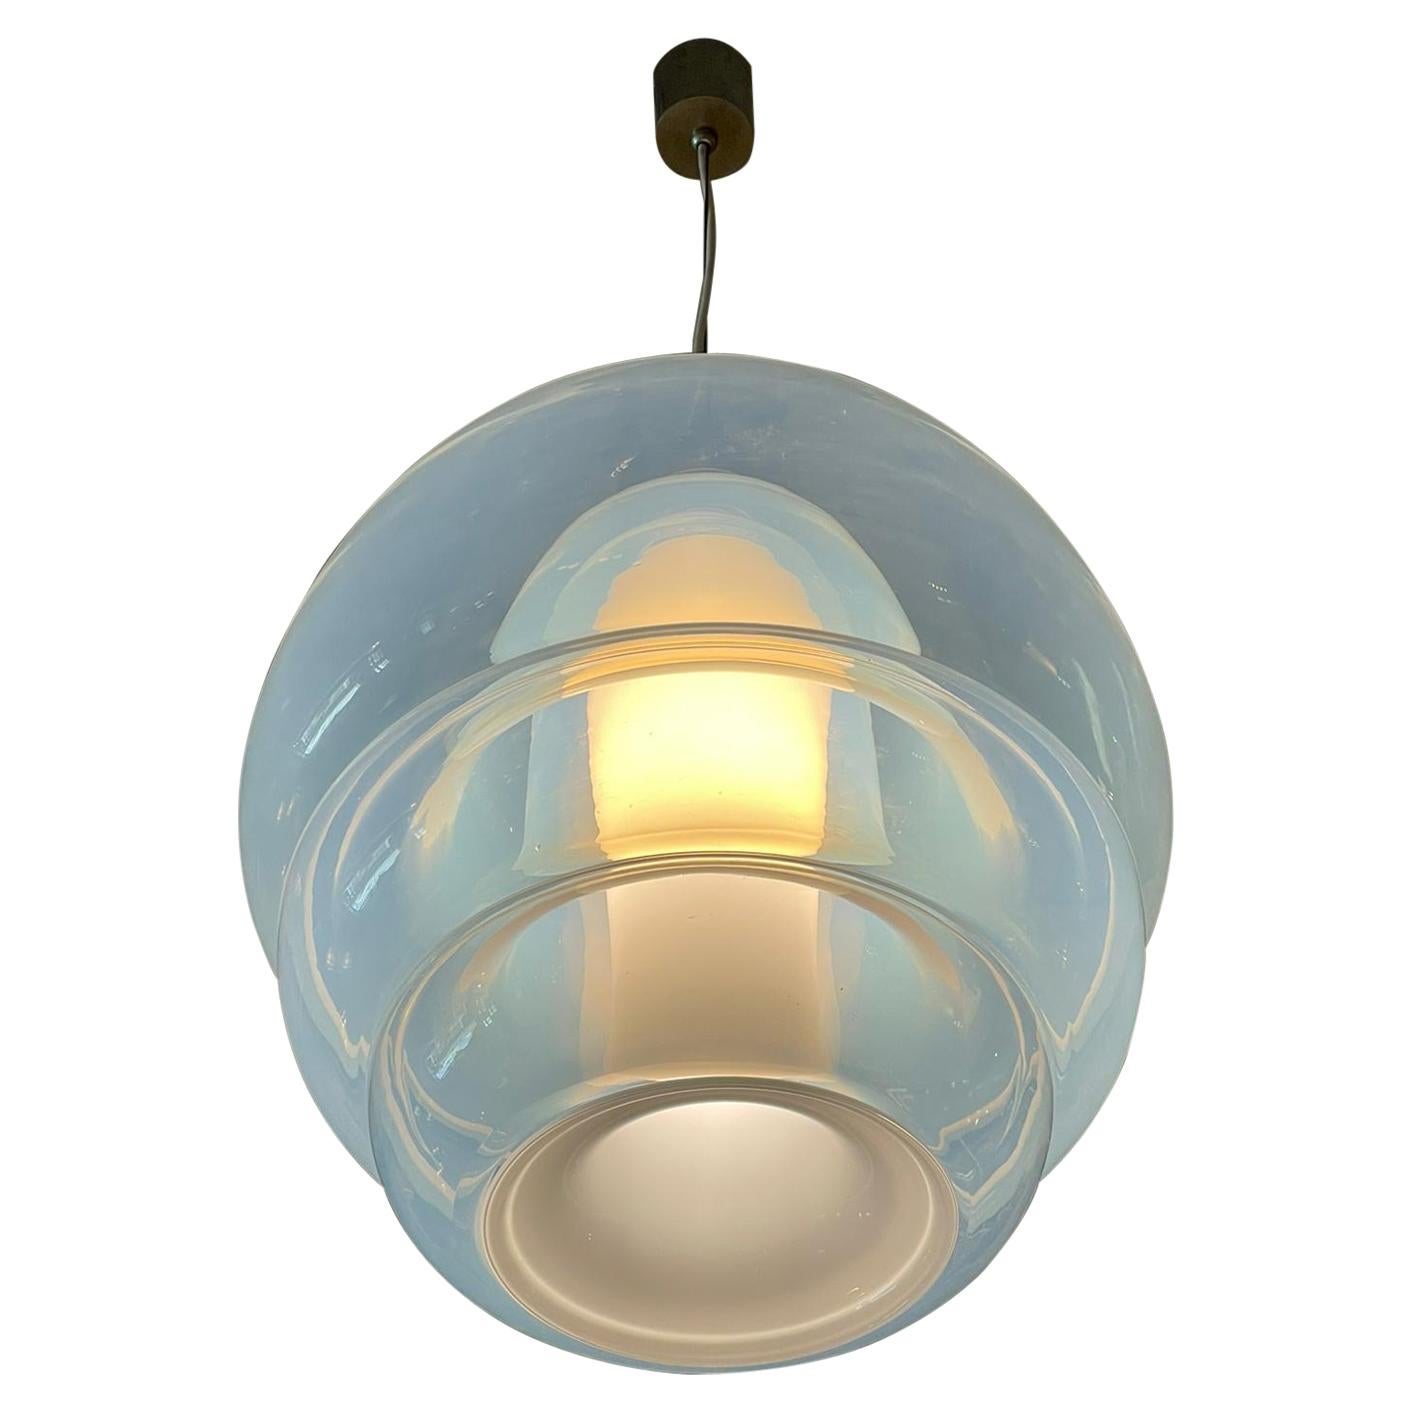 Carlo Nason Mazzega Mod LS134 Ceiling Lamp Murano Glass, Italy, 1969